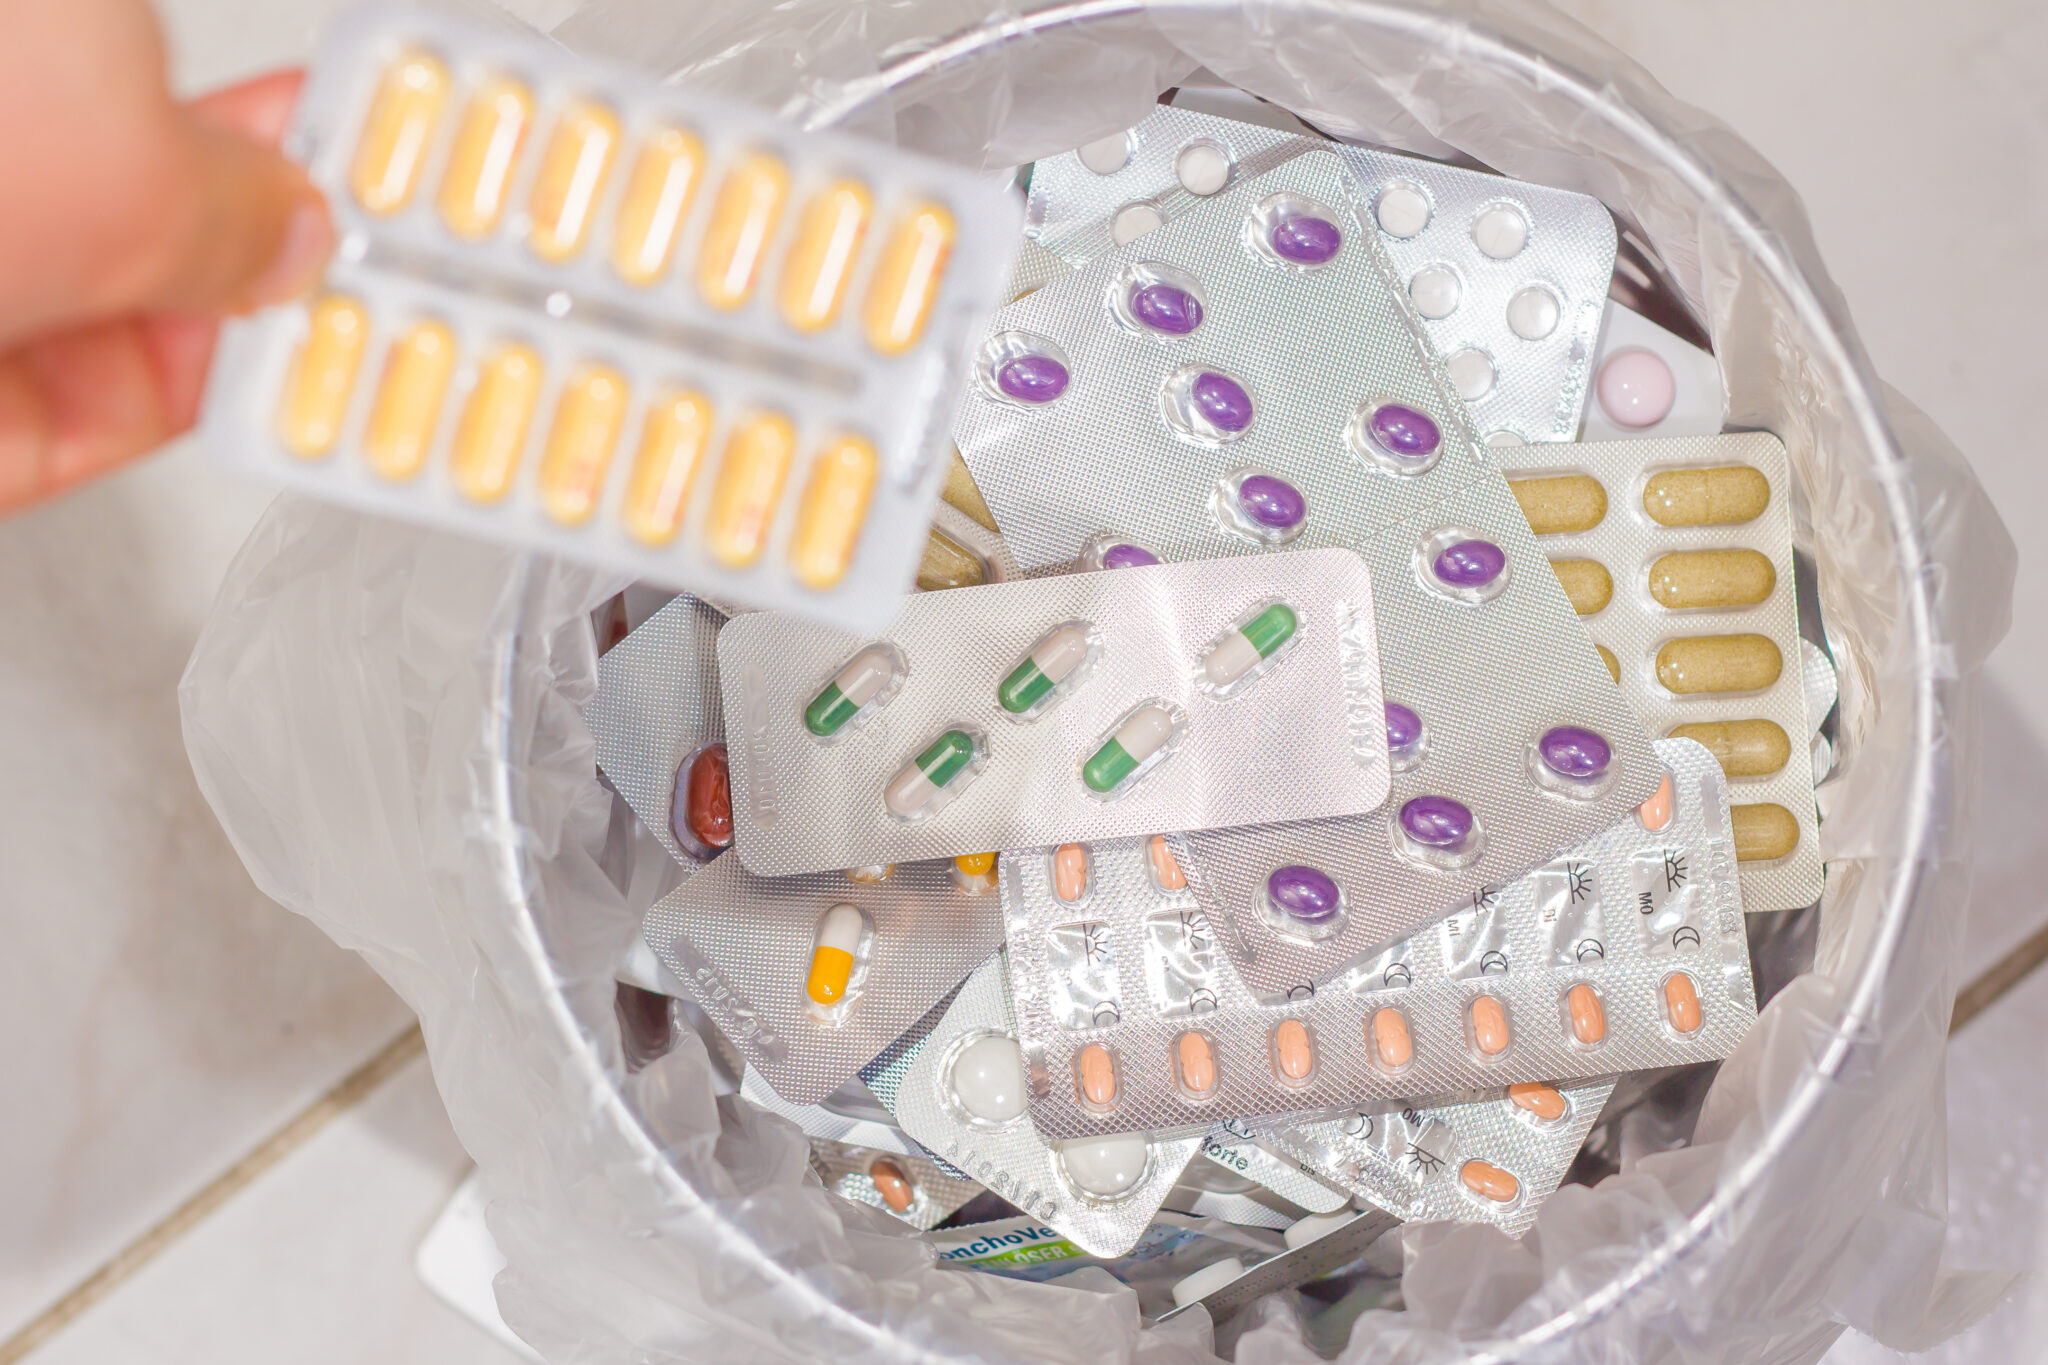 Farmacêutica explica como guardar e descartar medicamentos corretamente